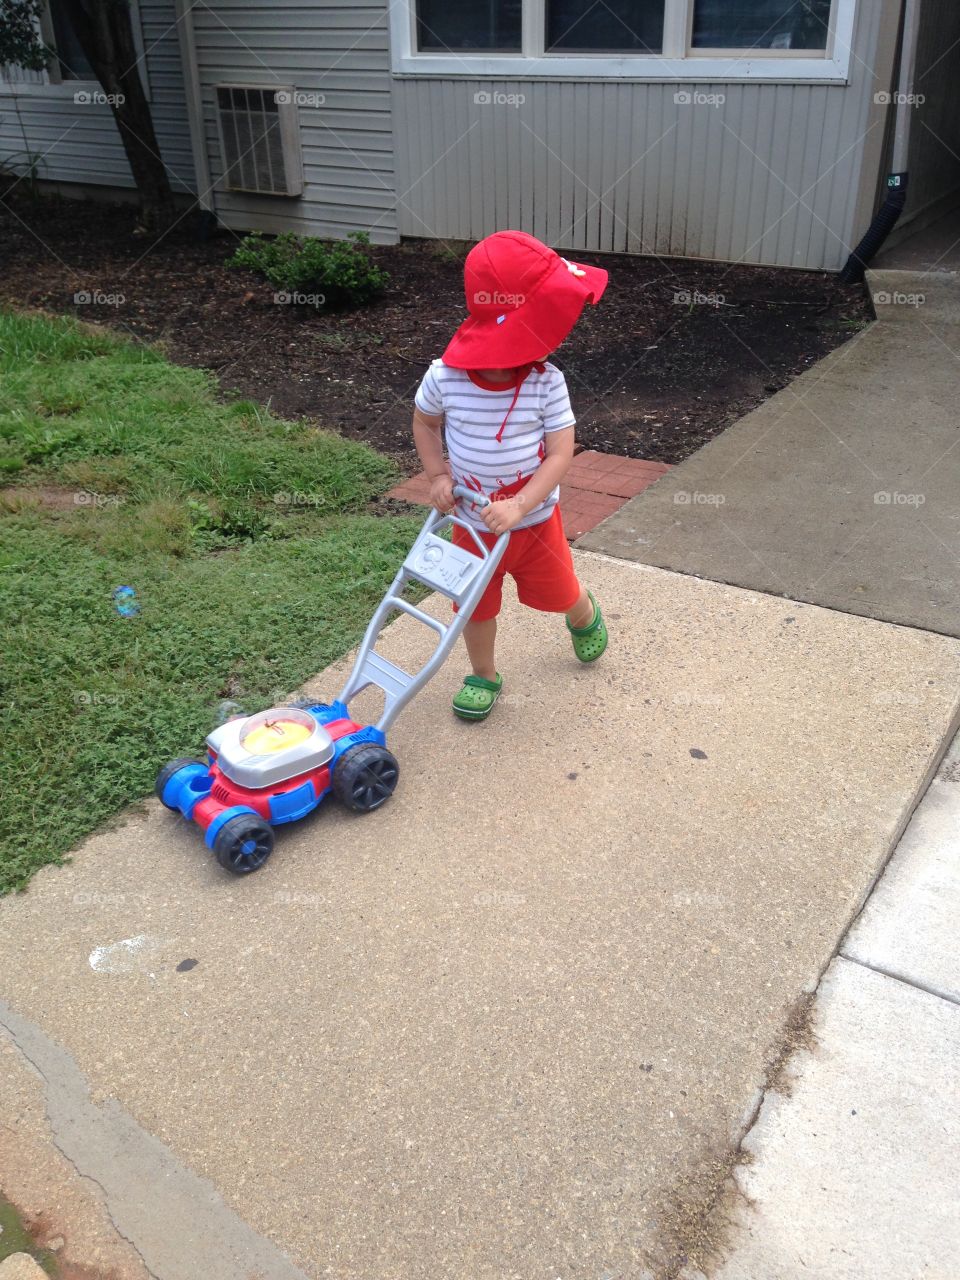 Toddler boy pretending to mow the lawn.